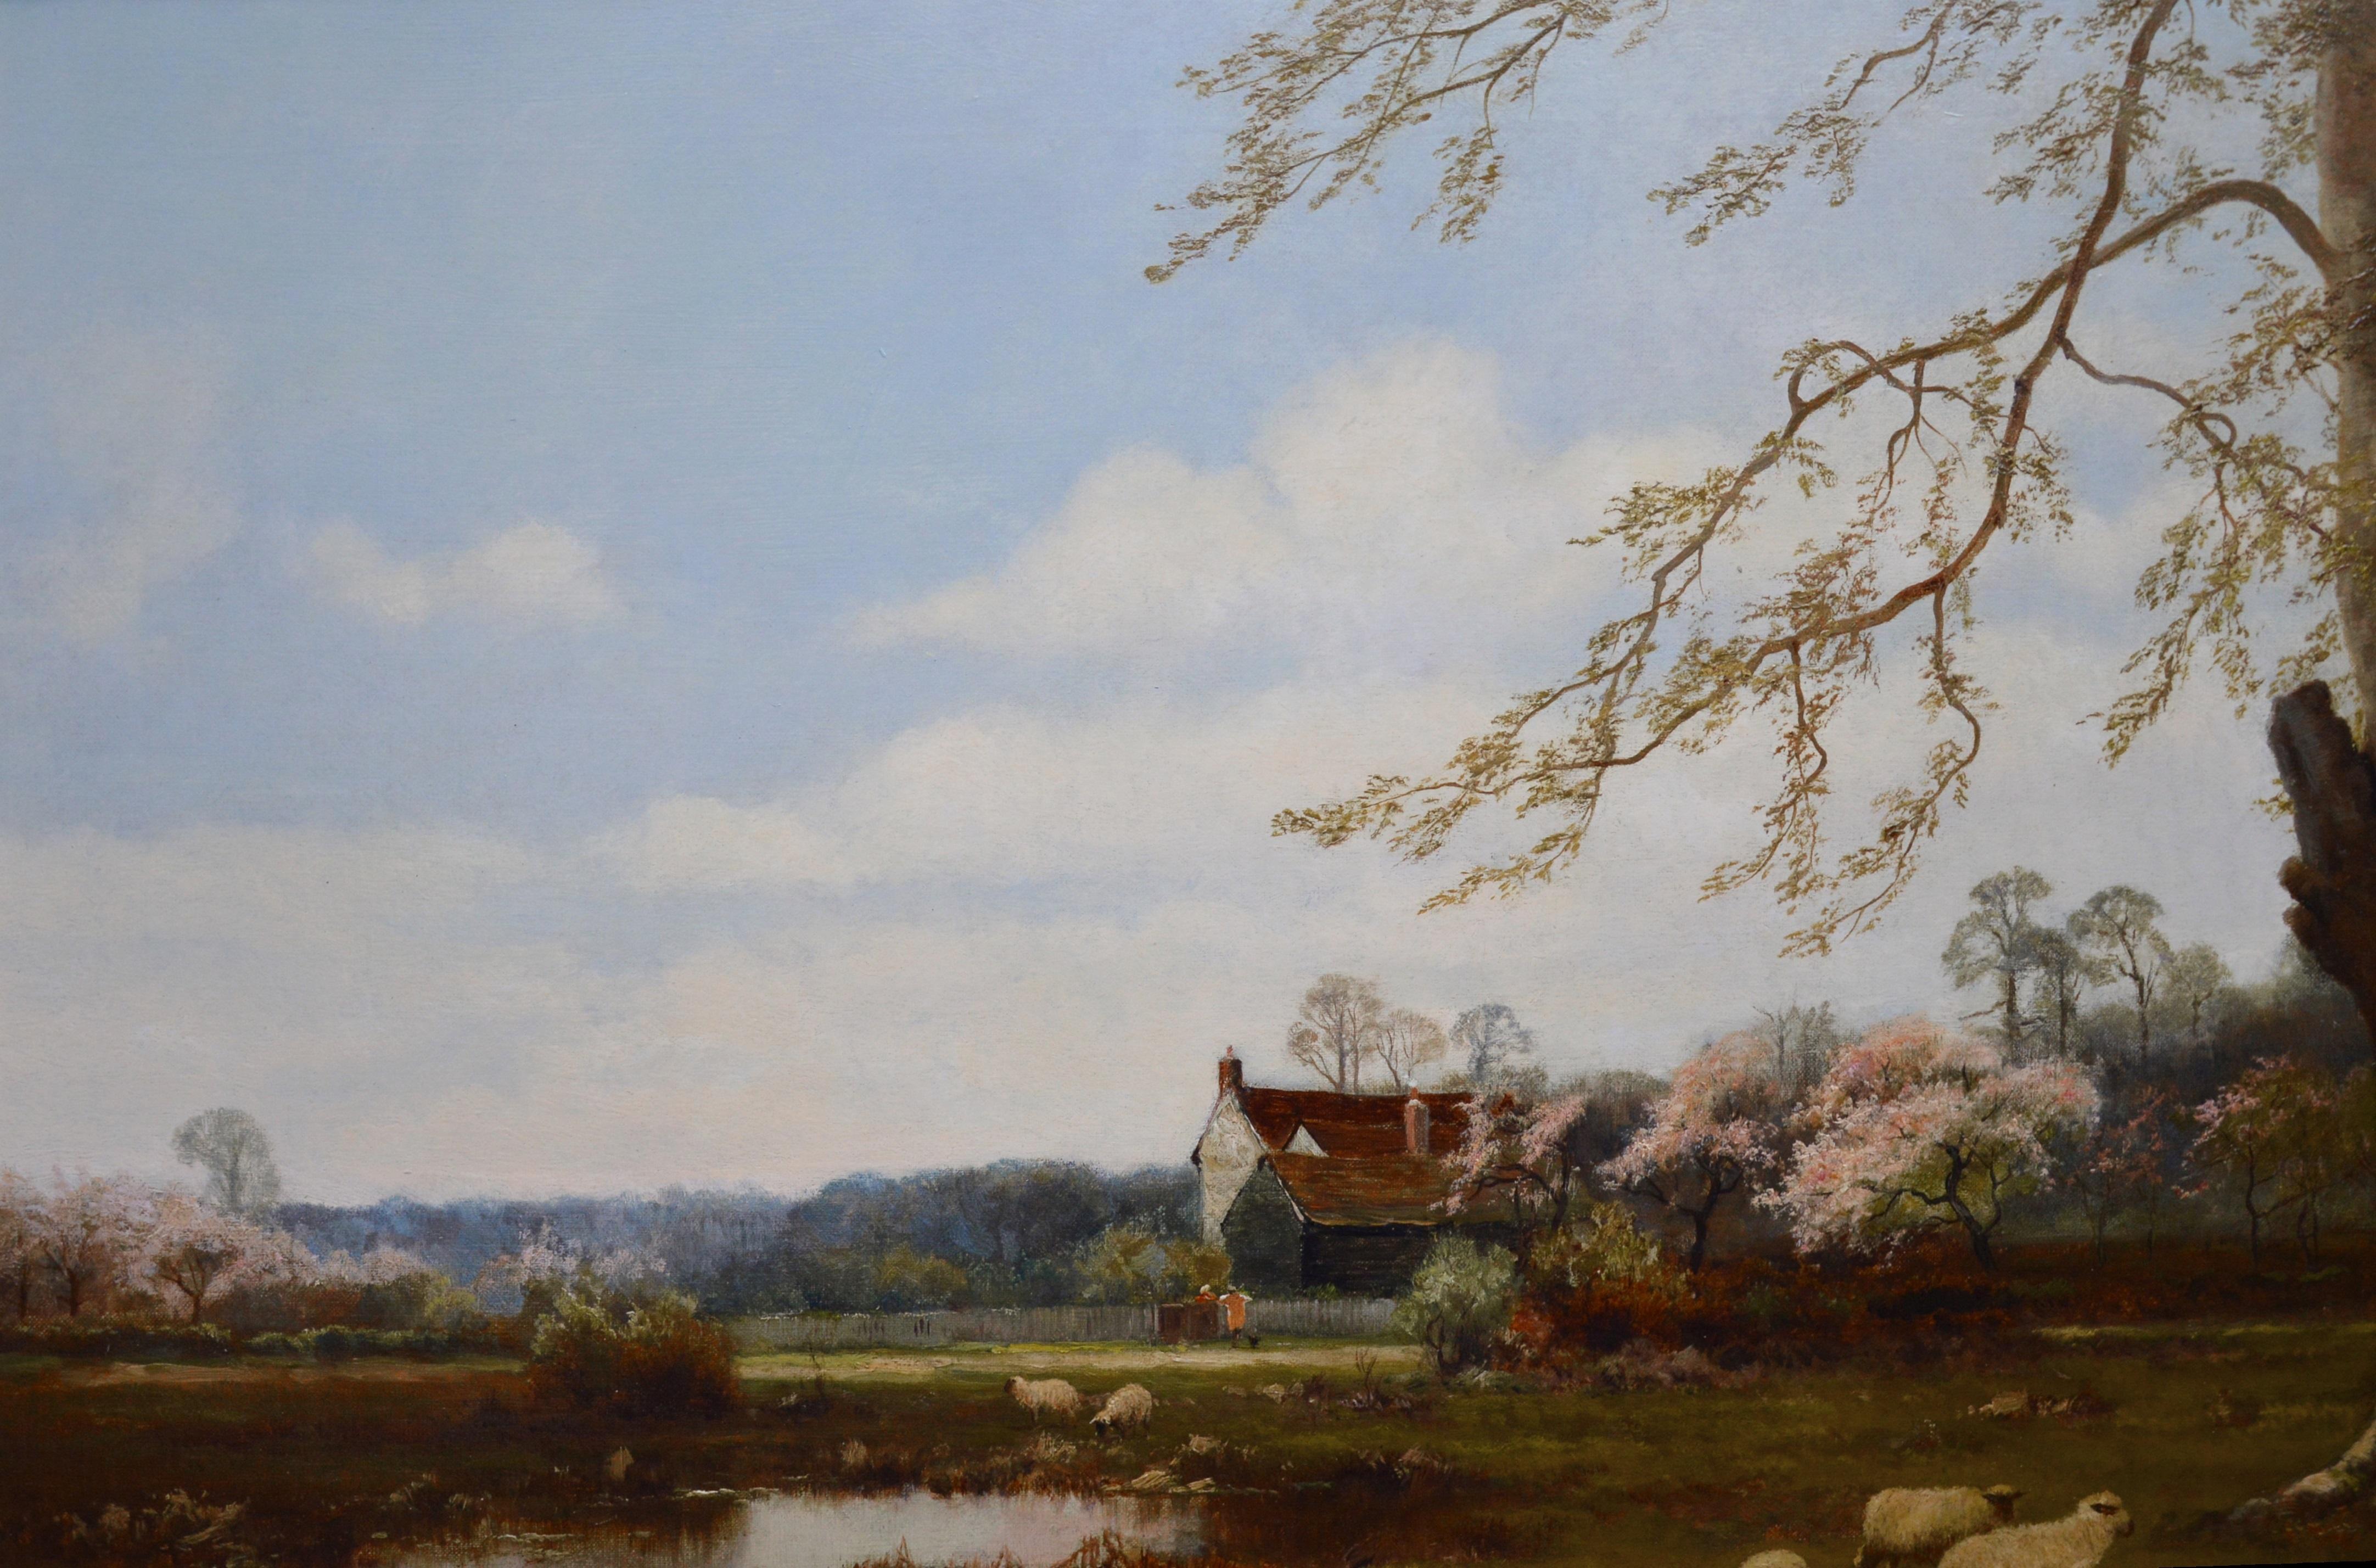 Berkshire Homestead - 19th Century English Landscape Oil Painting - de Breanski 3